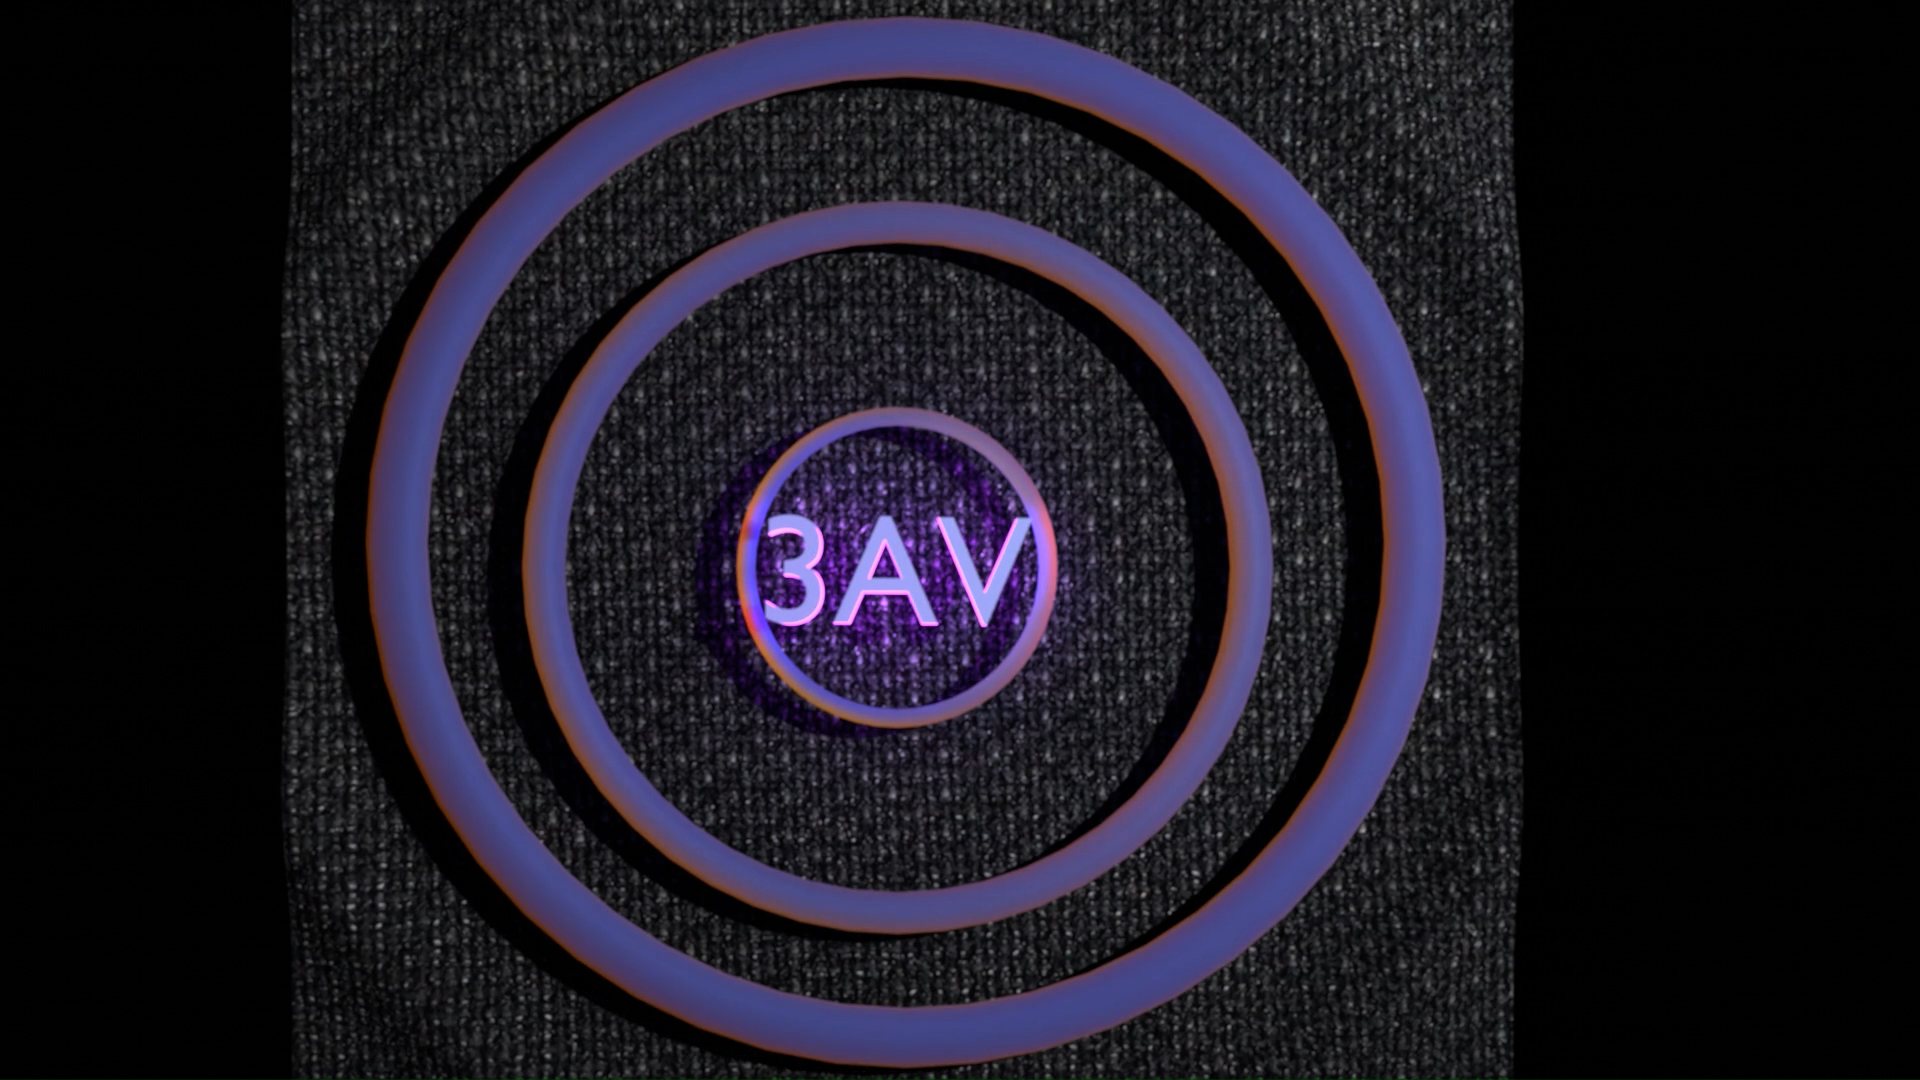 3AV Logo